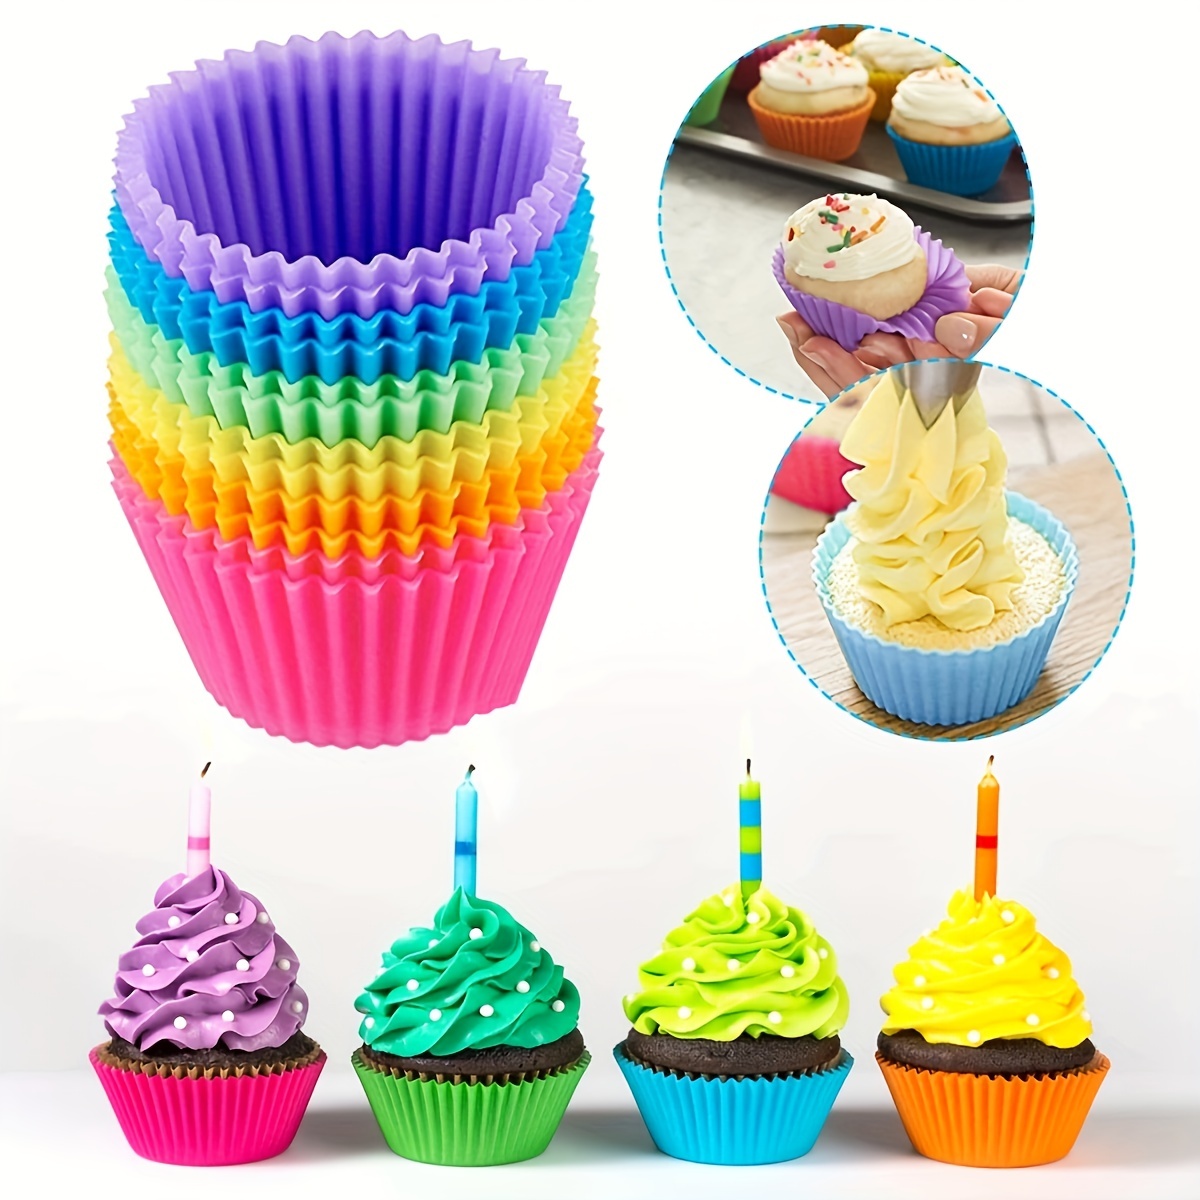 Moules à muffins en silicone Multicolore